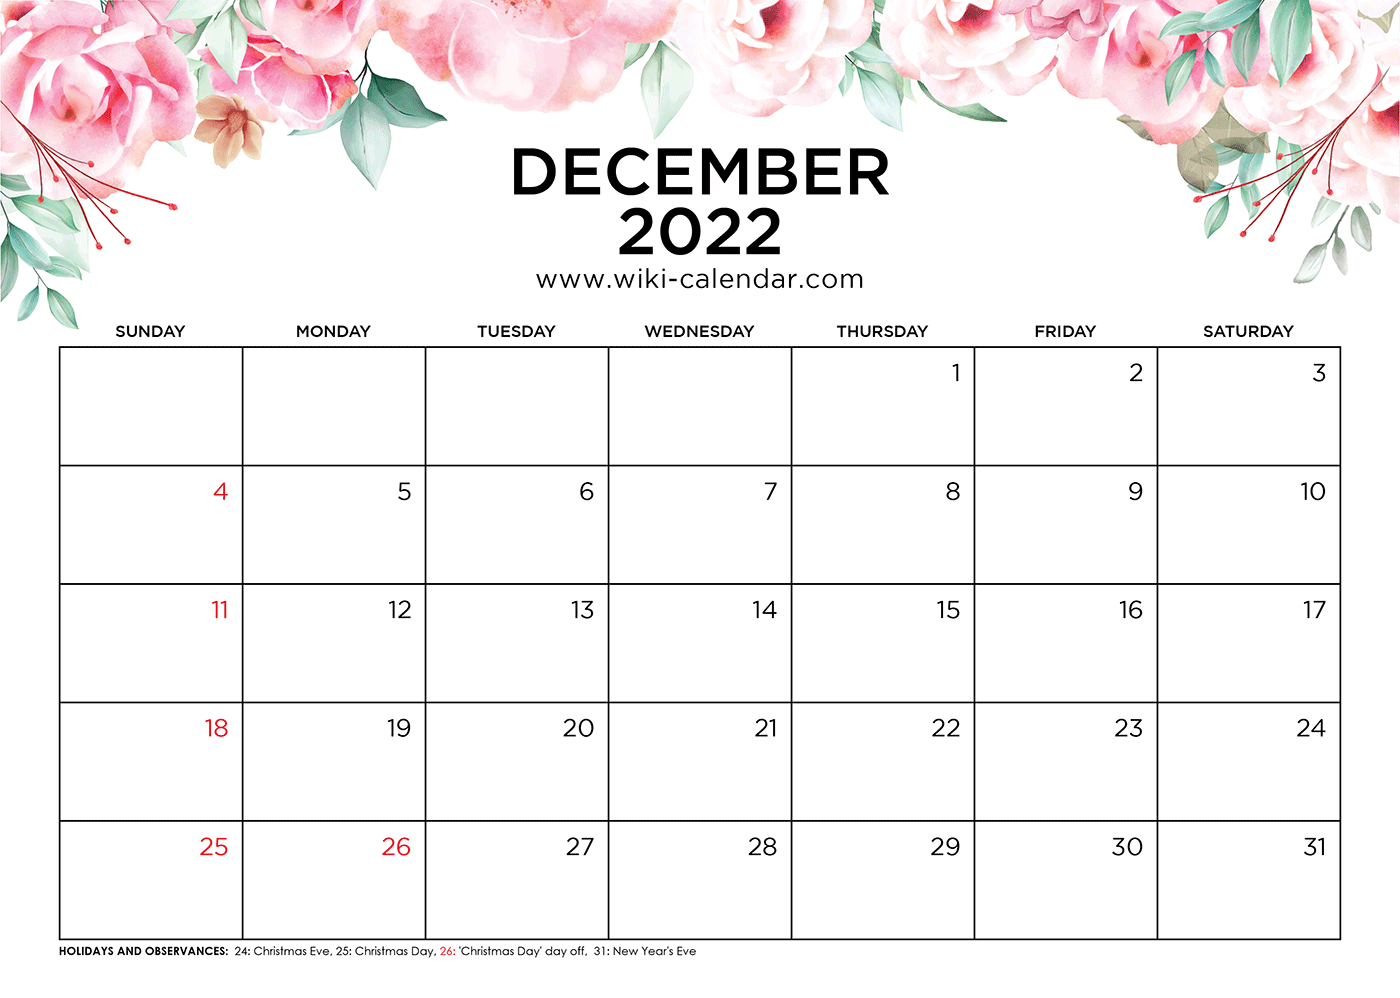 December 2022 Calendar With Holidays Free Printable December 2022 Calendars - Wiki Calendar